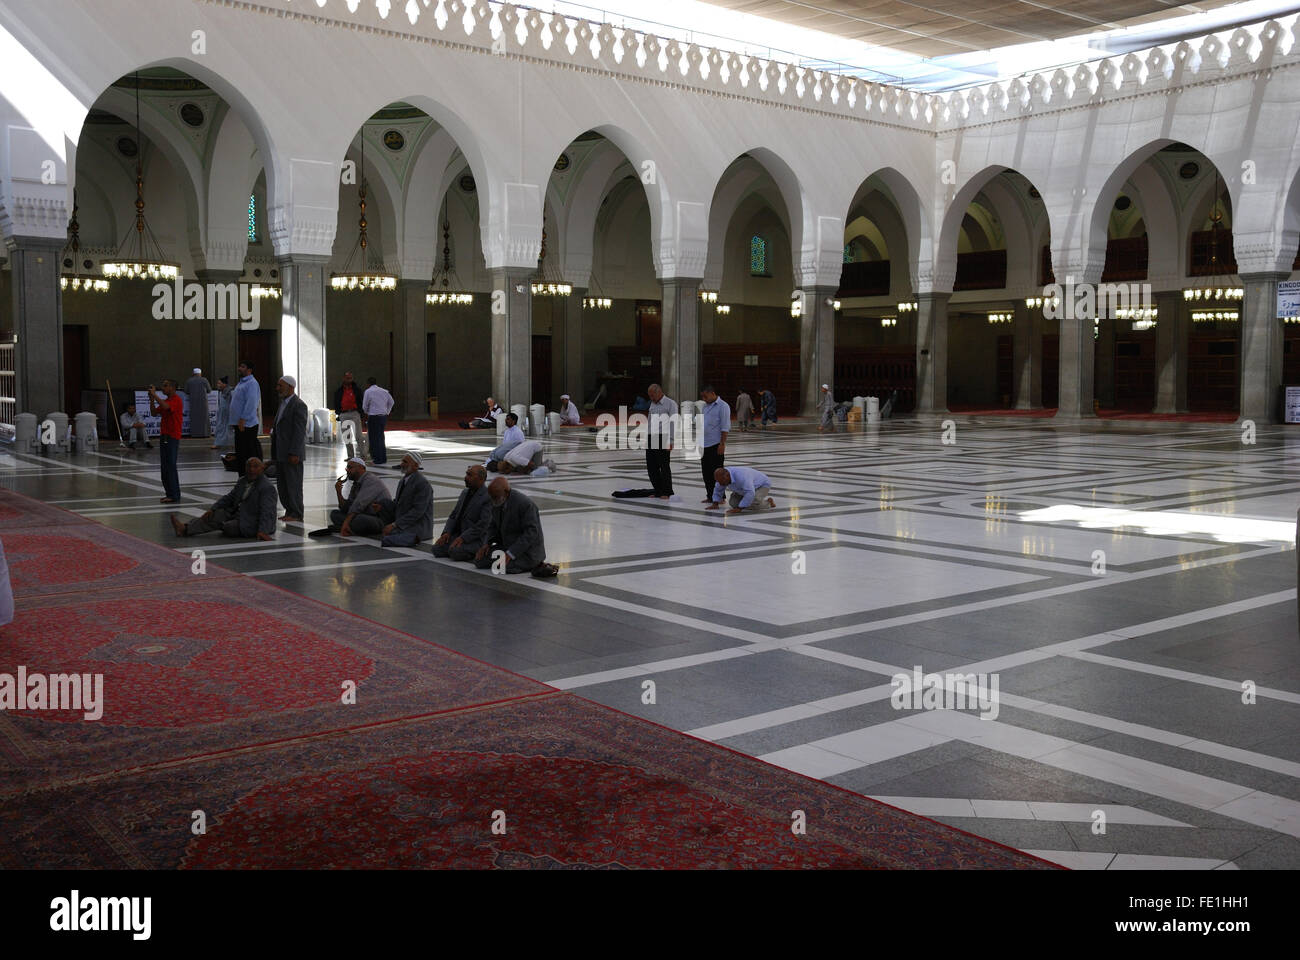 Adoradores en Masjid Quba, la primera mezquita que se construyó, Medina, Arabia Saudita Foto de stock